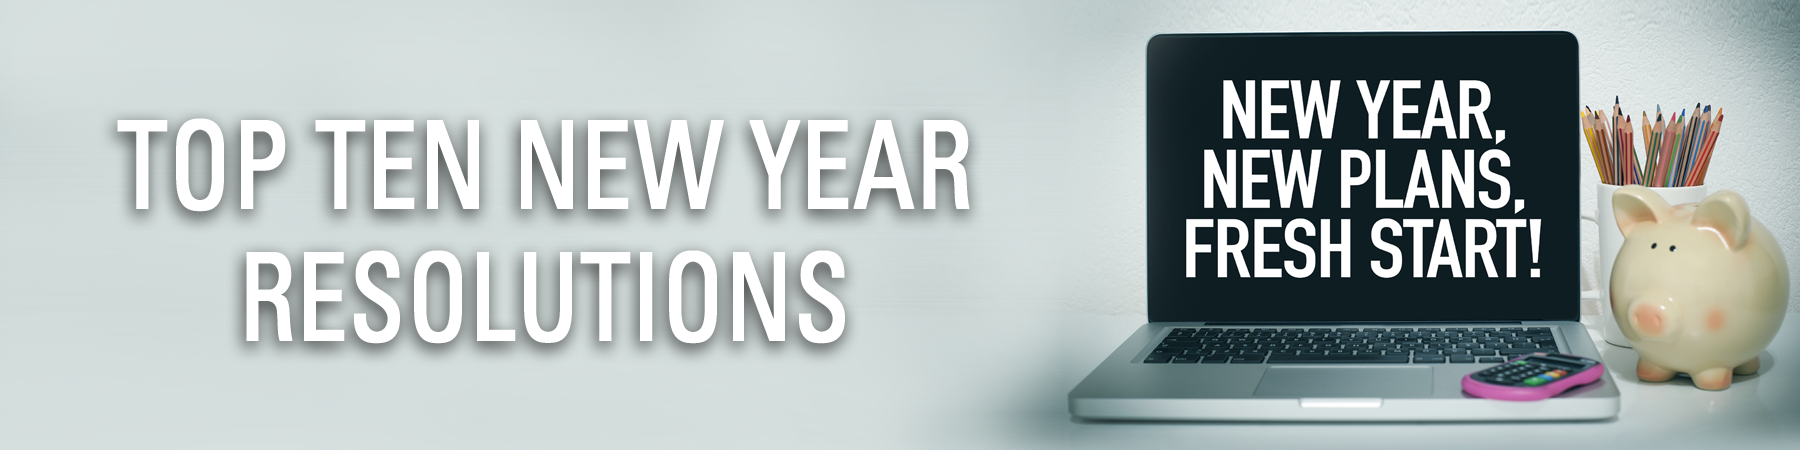 Top Ten New Year Resolutions